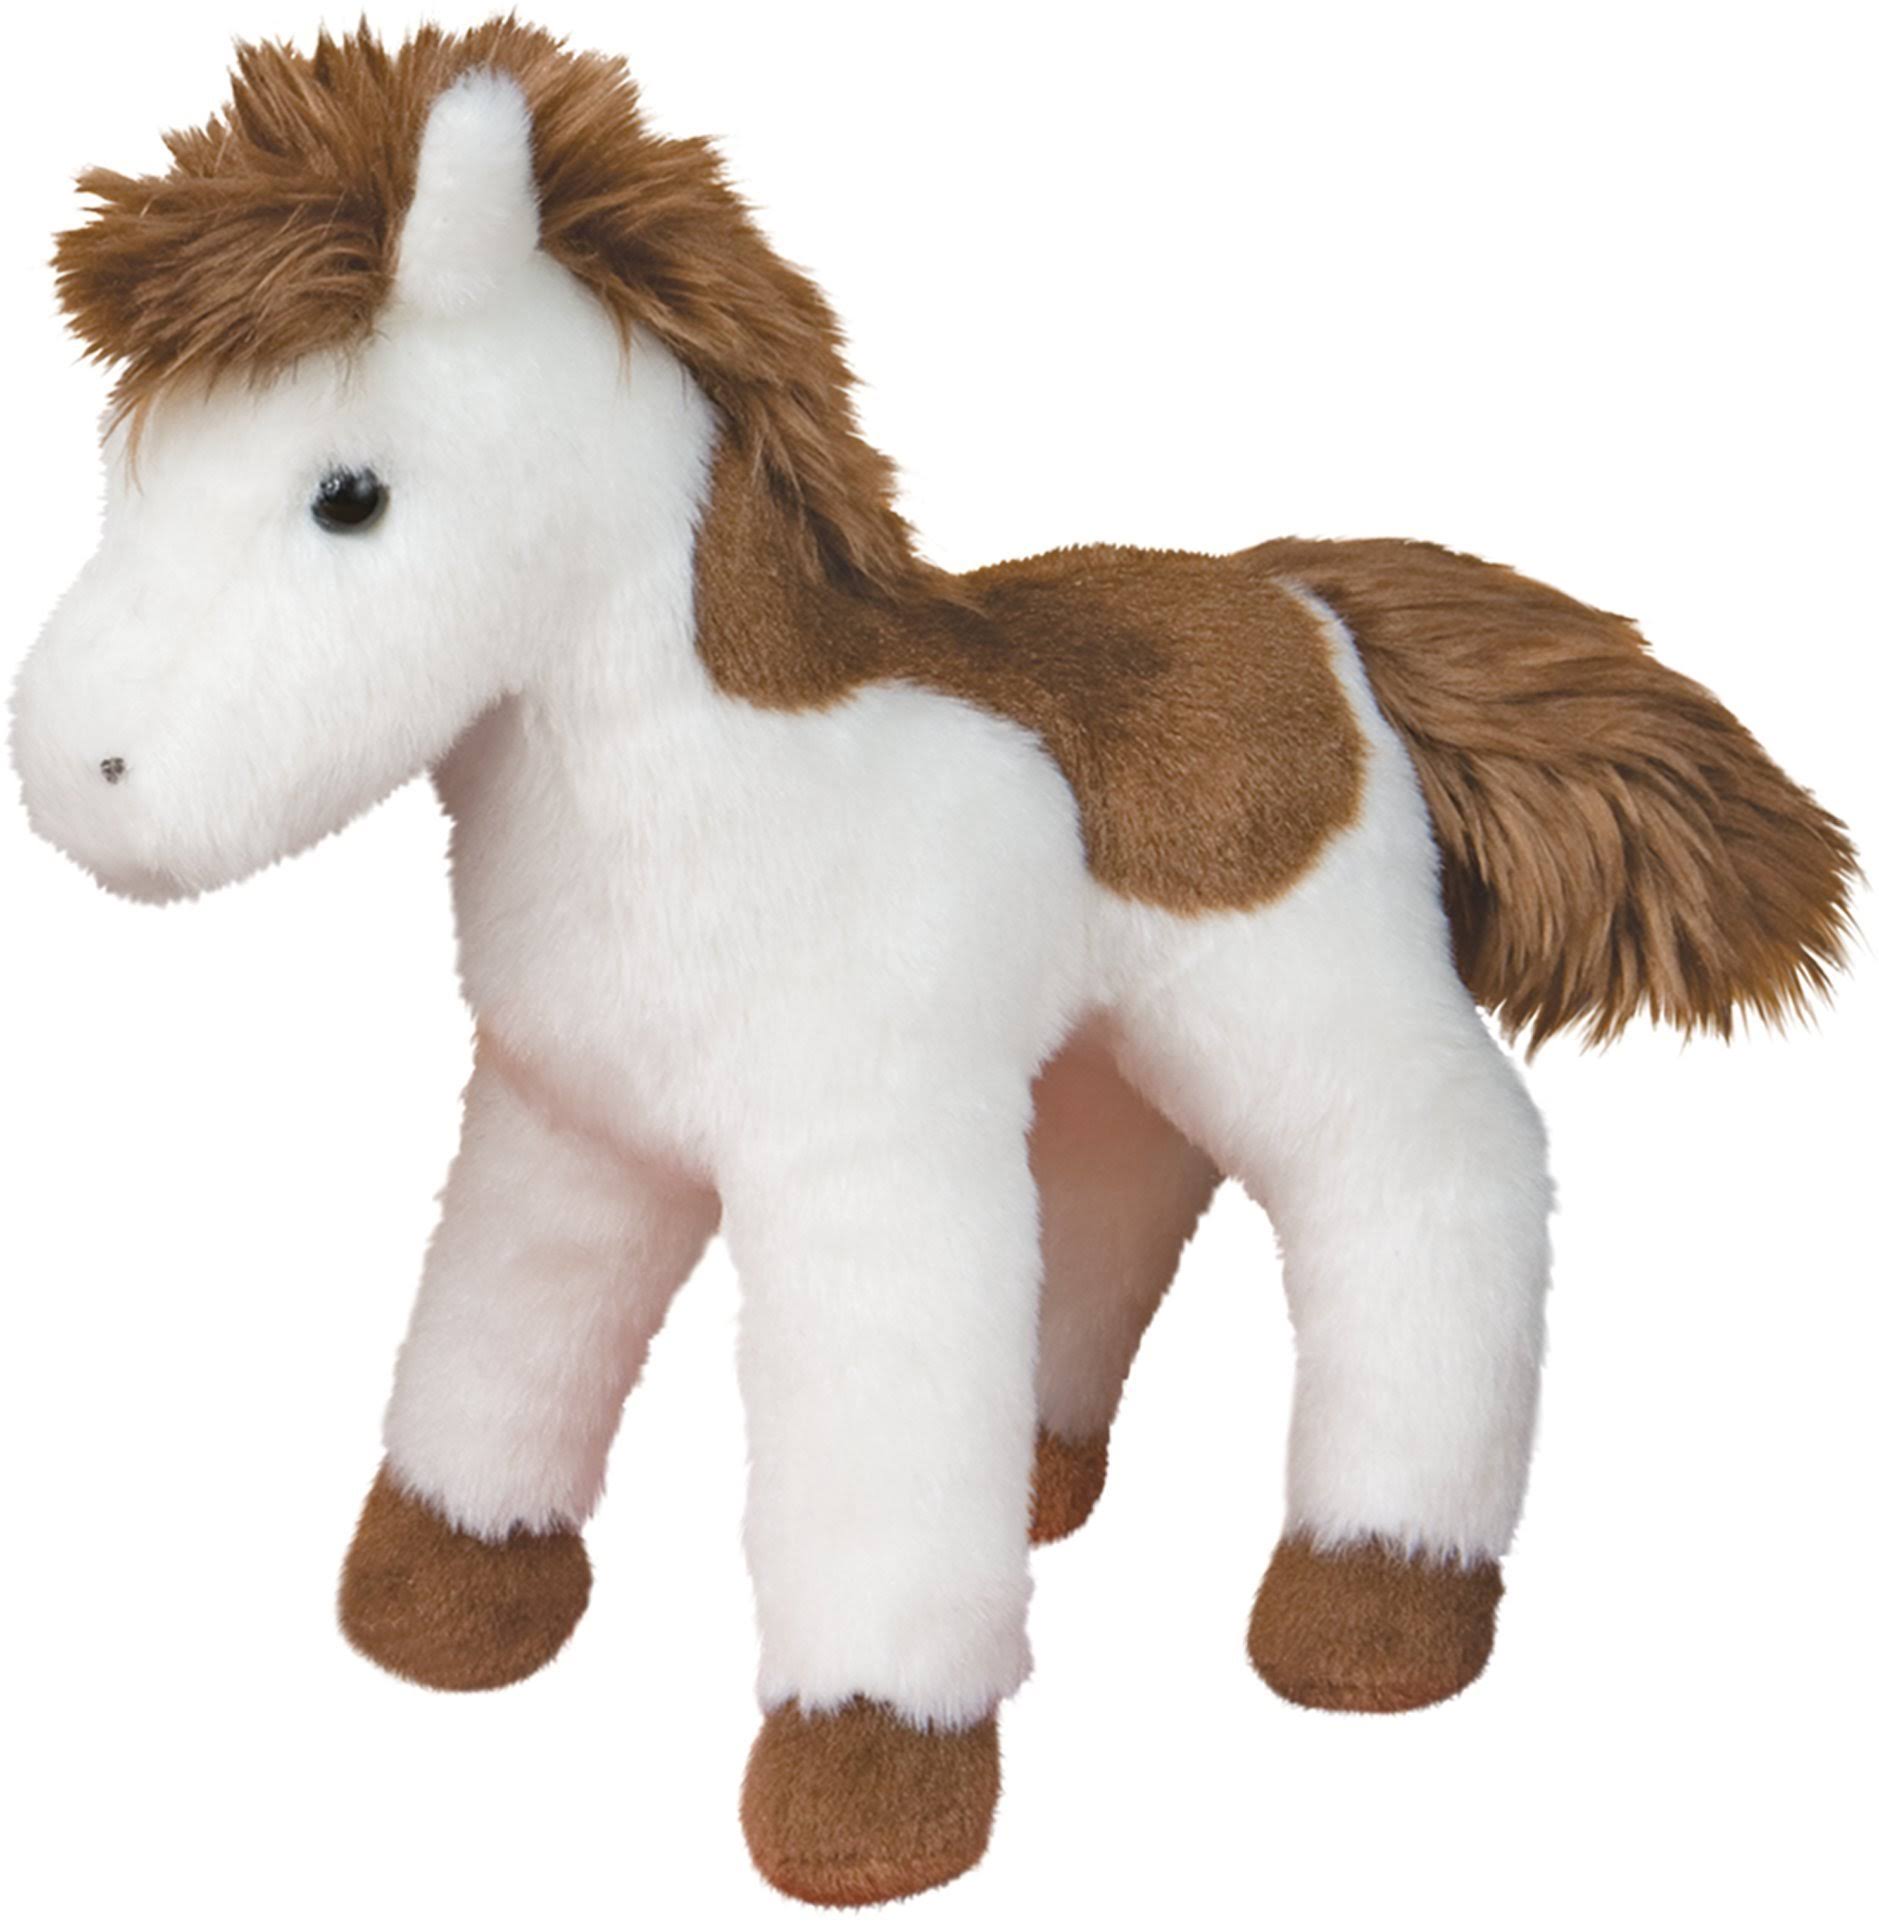 Douglas Cuddle Toys 4047 Stuffed Animal Arrow Head Paint Horse Plush Toy - Brown, 20cm